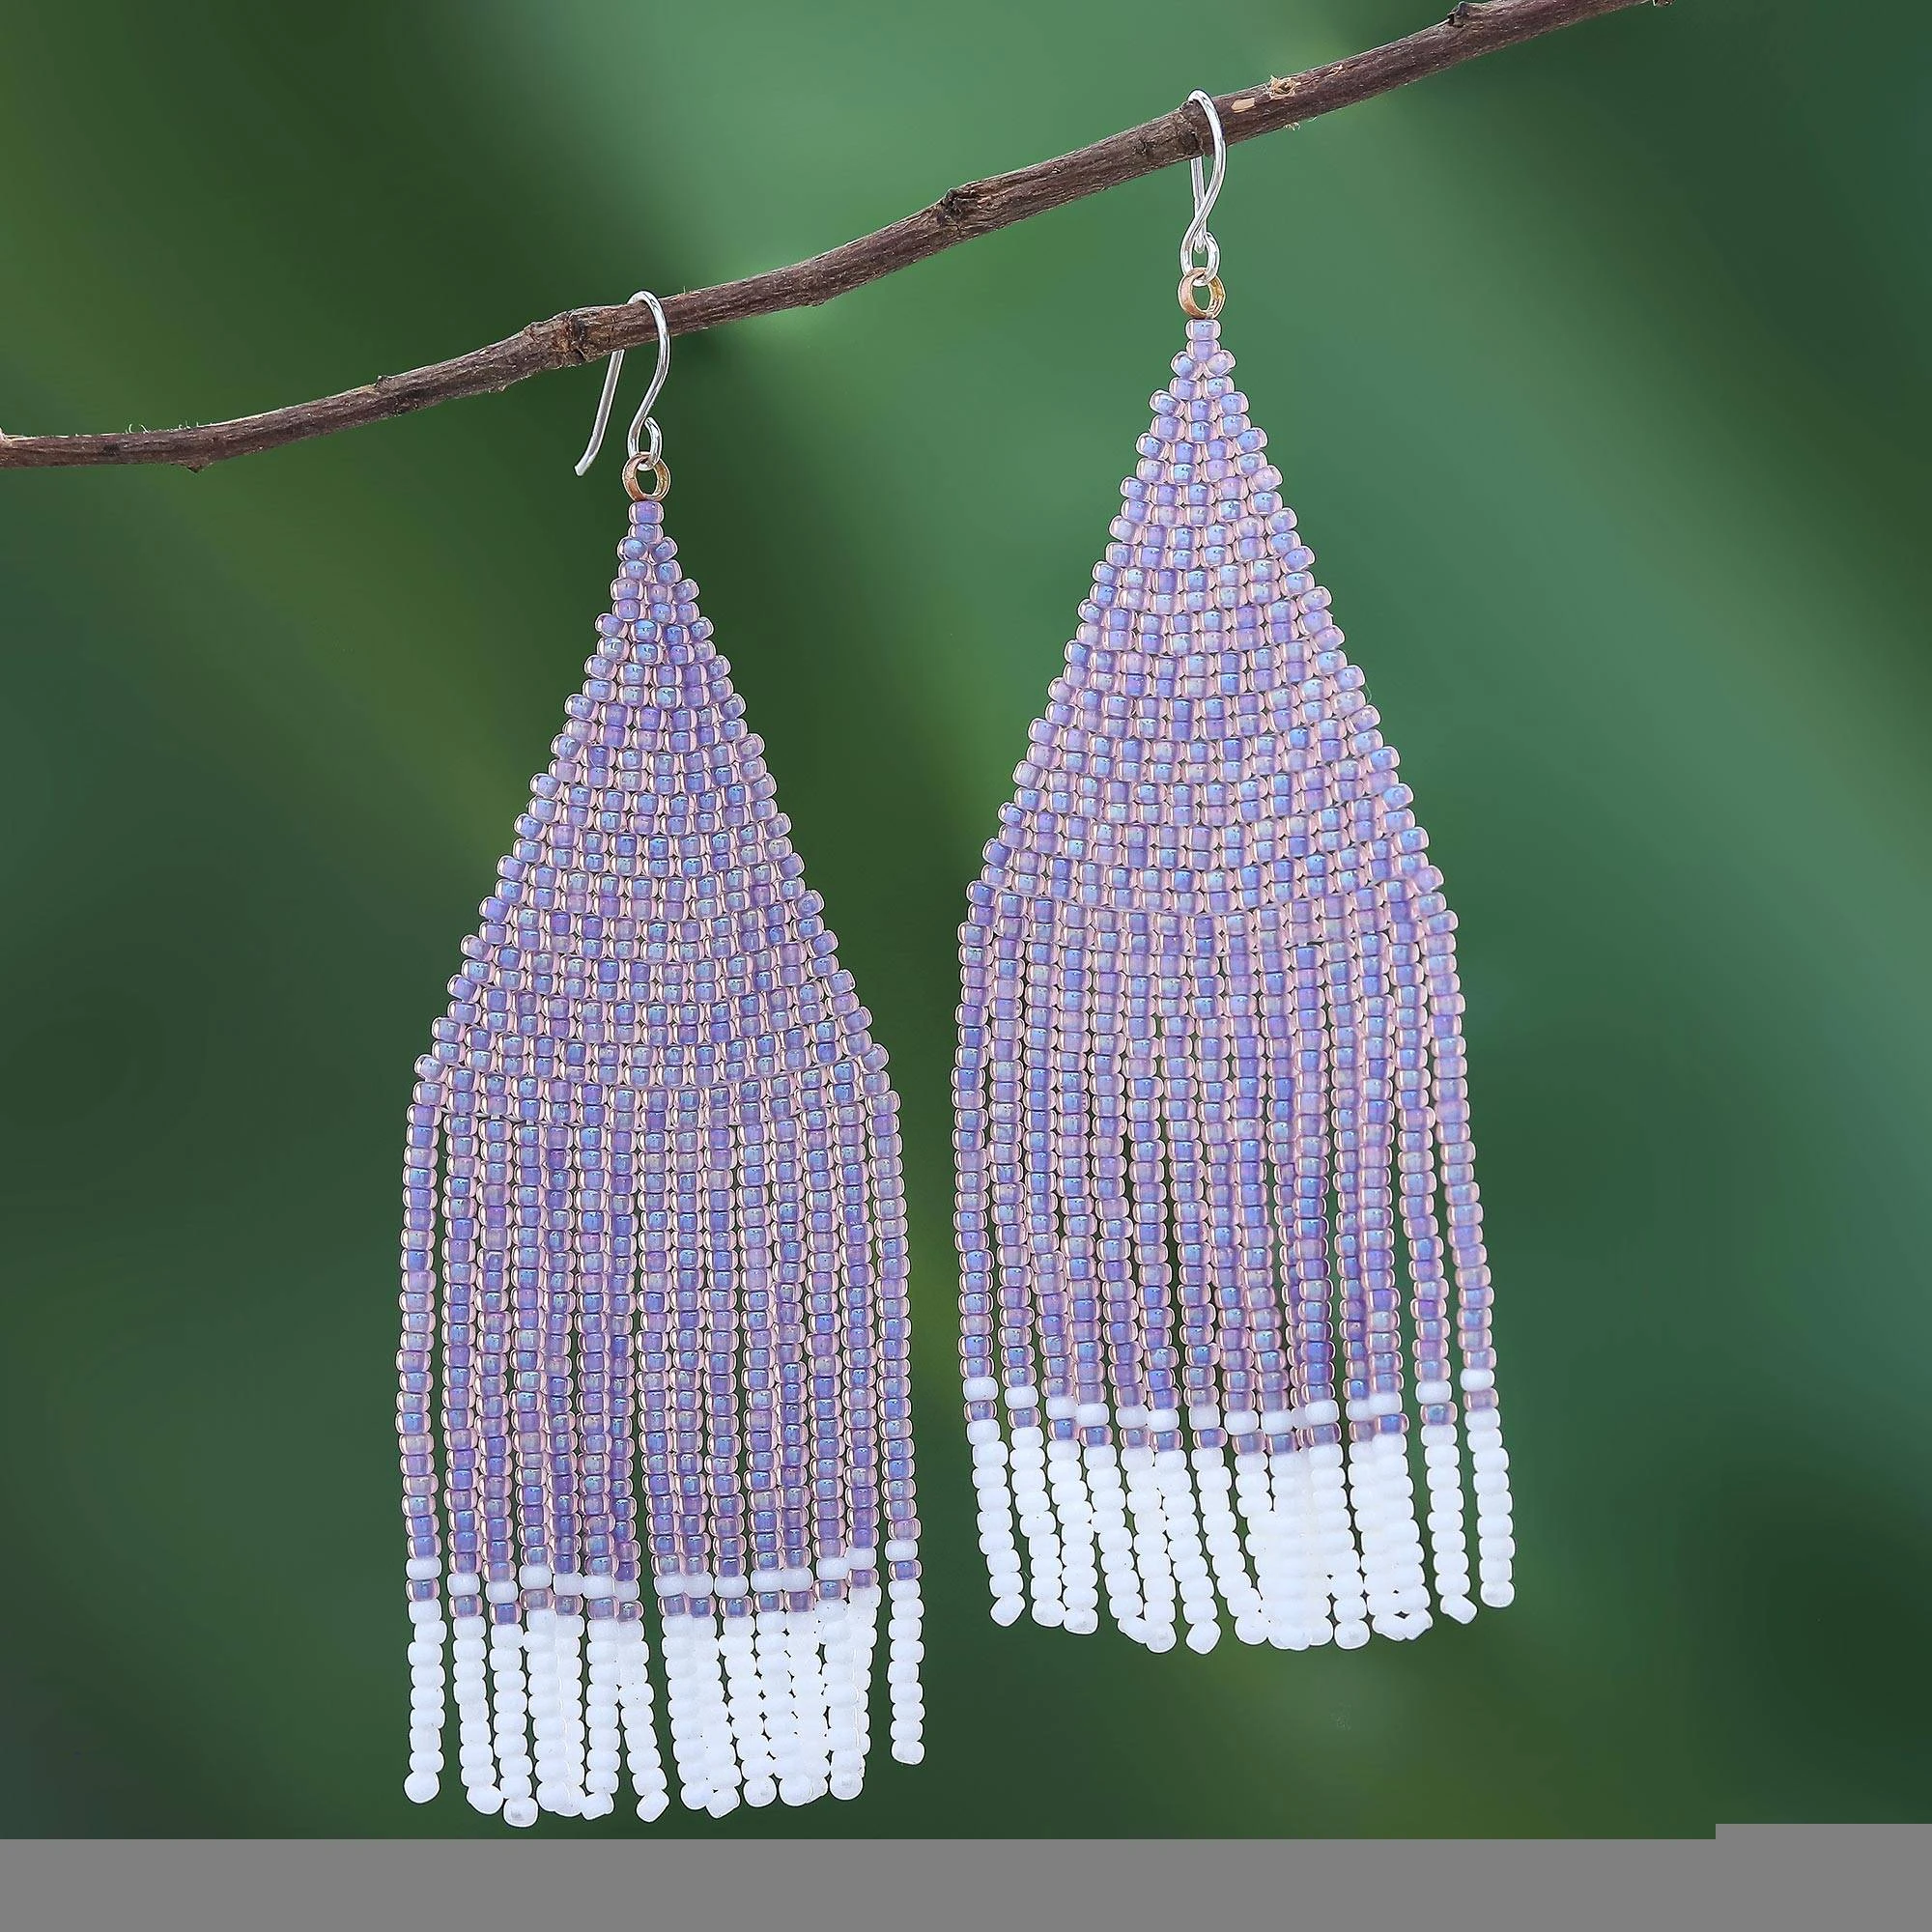 Glass Beaded Waterfall Earrings - Lavender and White Glass Beads Earrings - Handmade Boho Jewelry